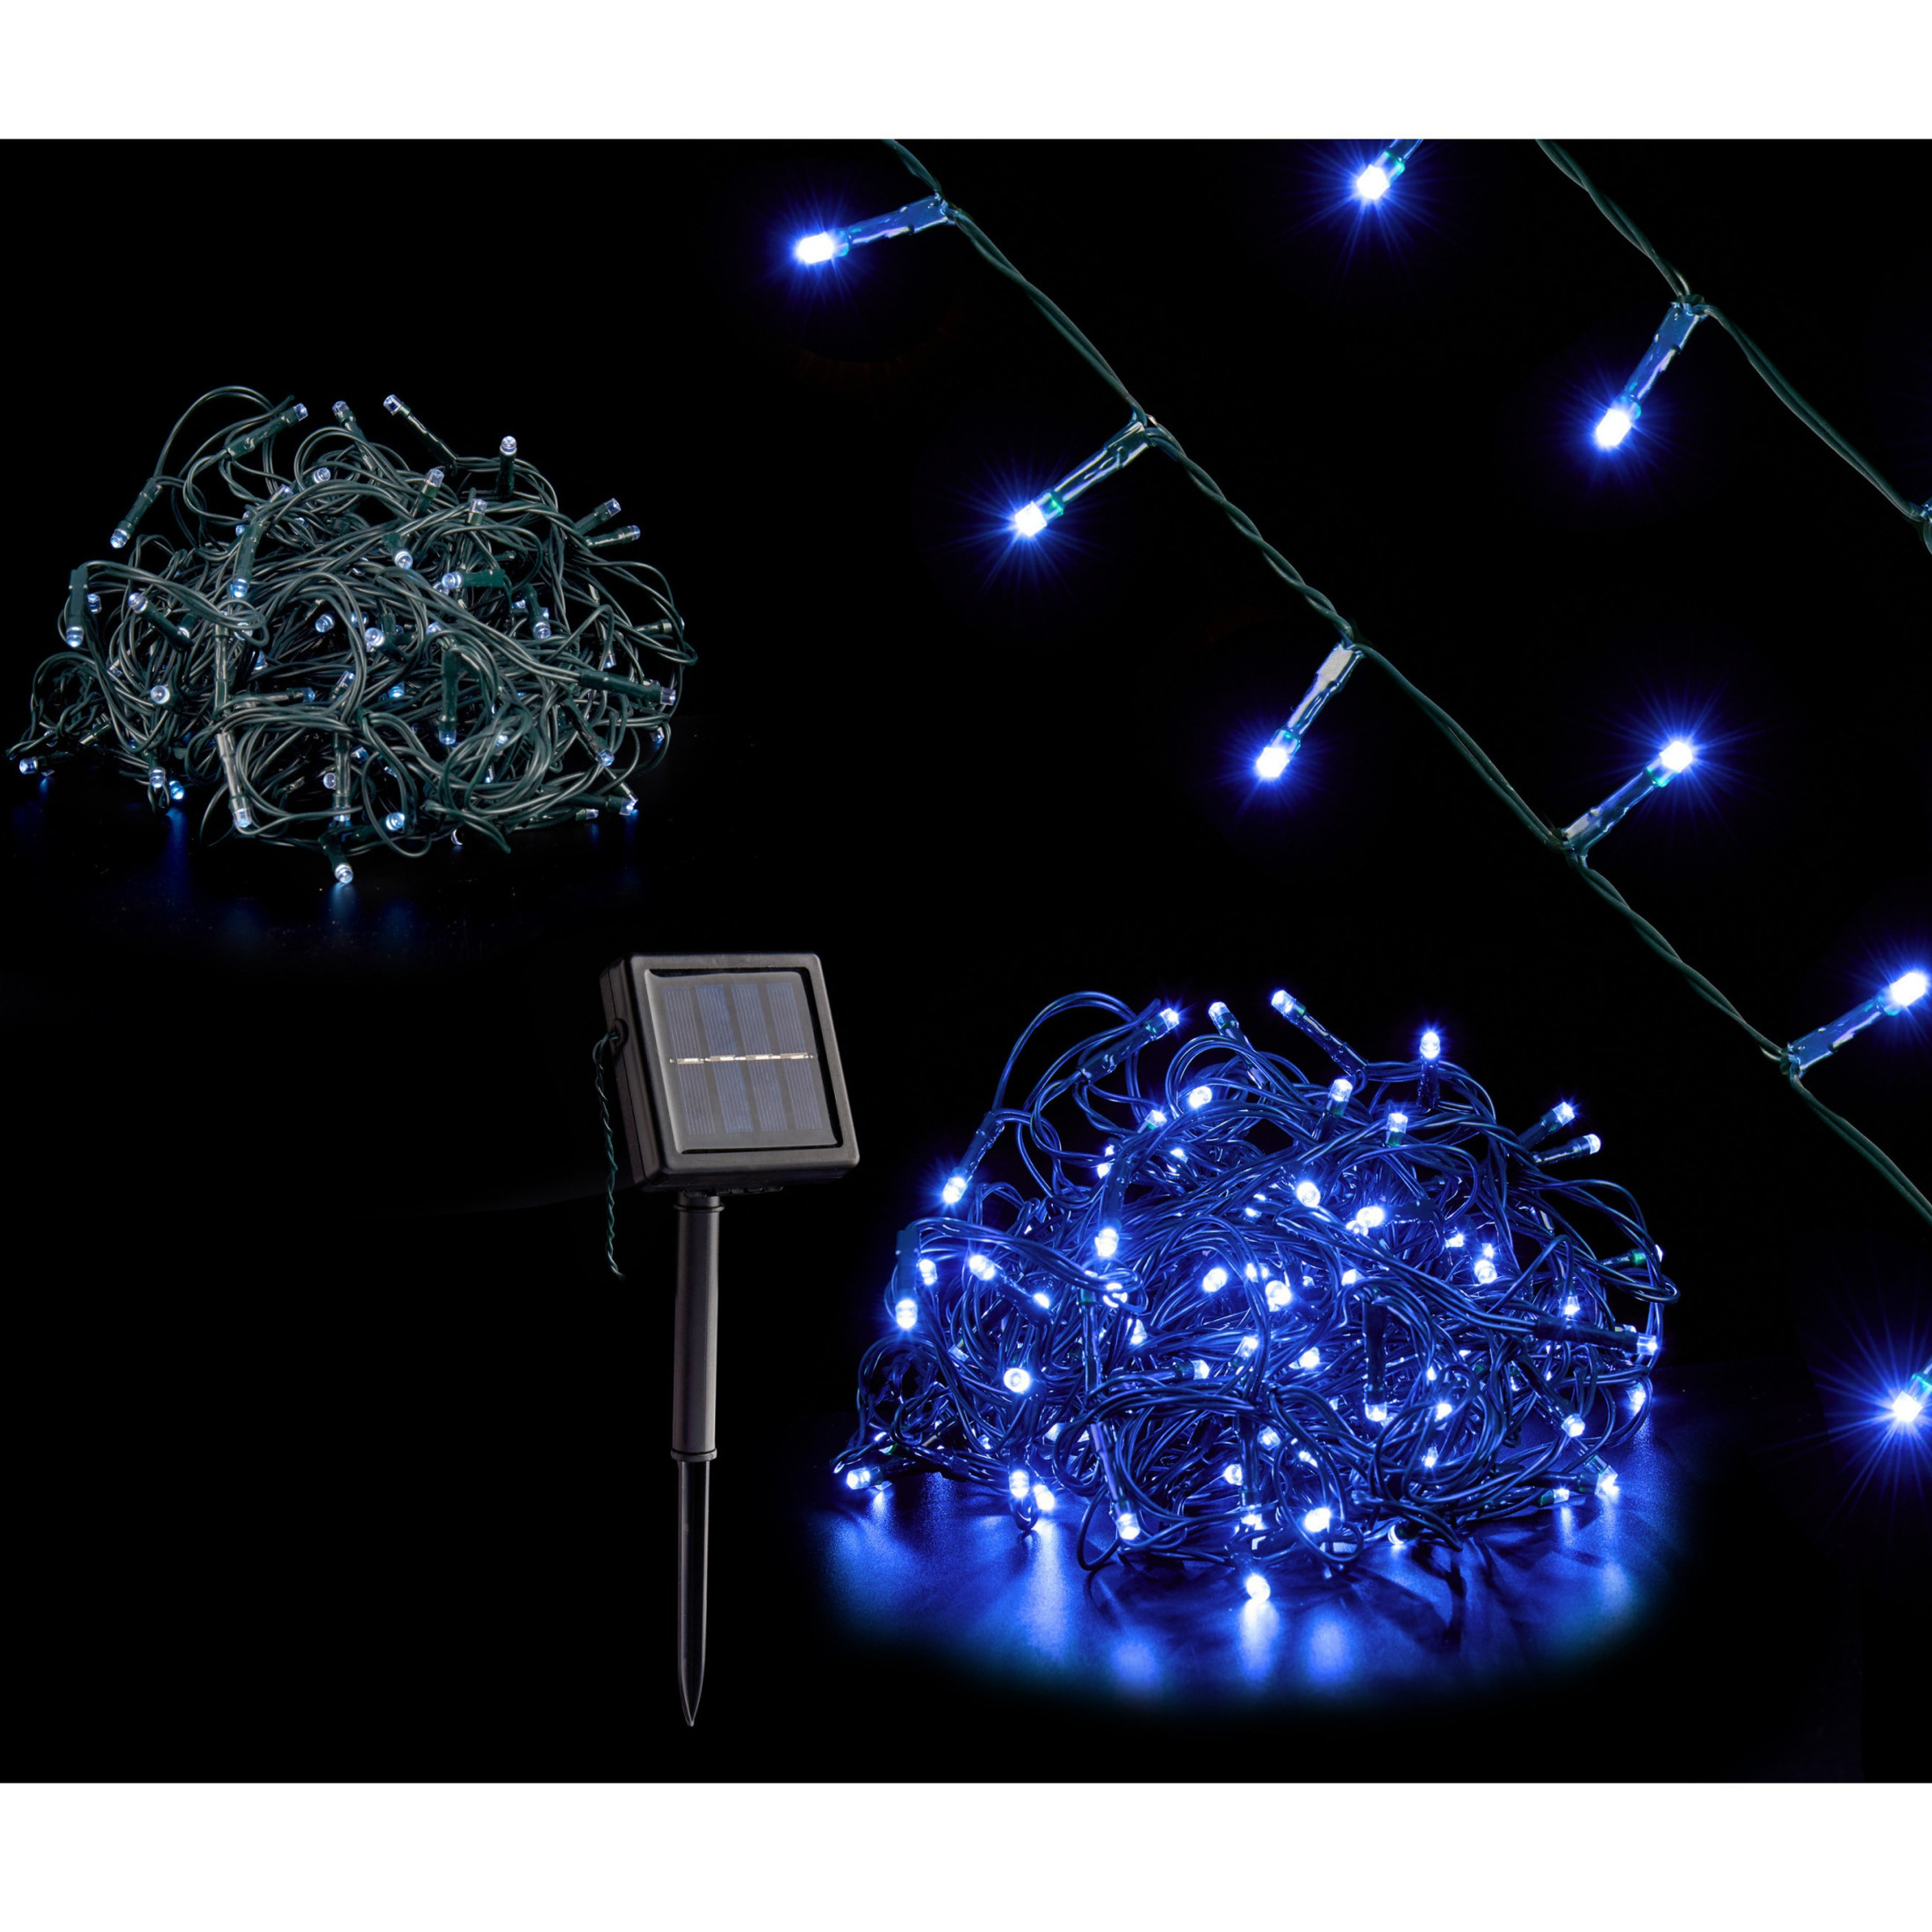 Kerstverlichting-party lights 200 blauwe LED lampjes op zonne-energie